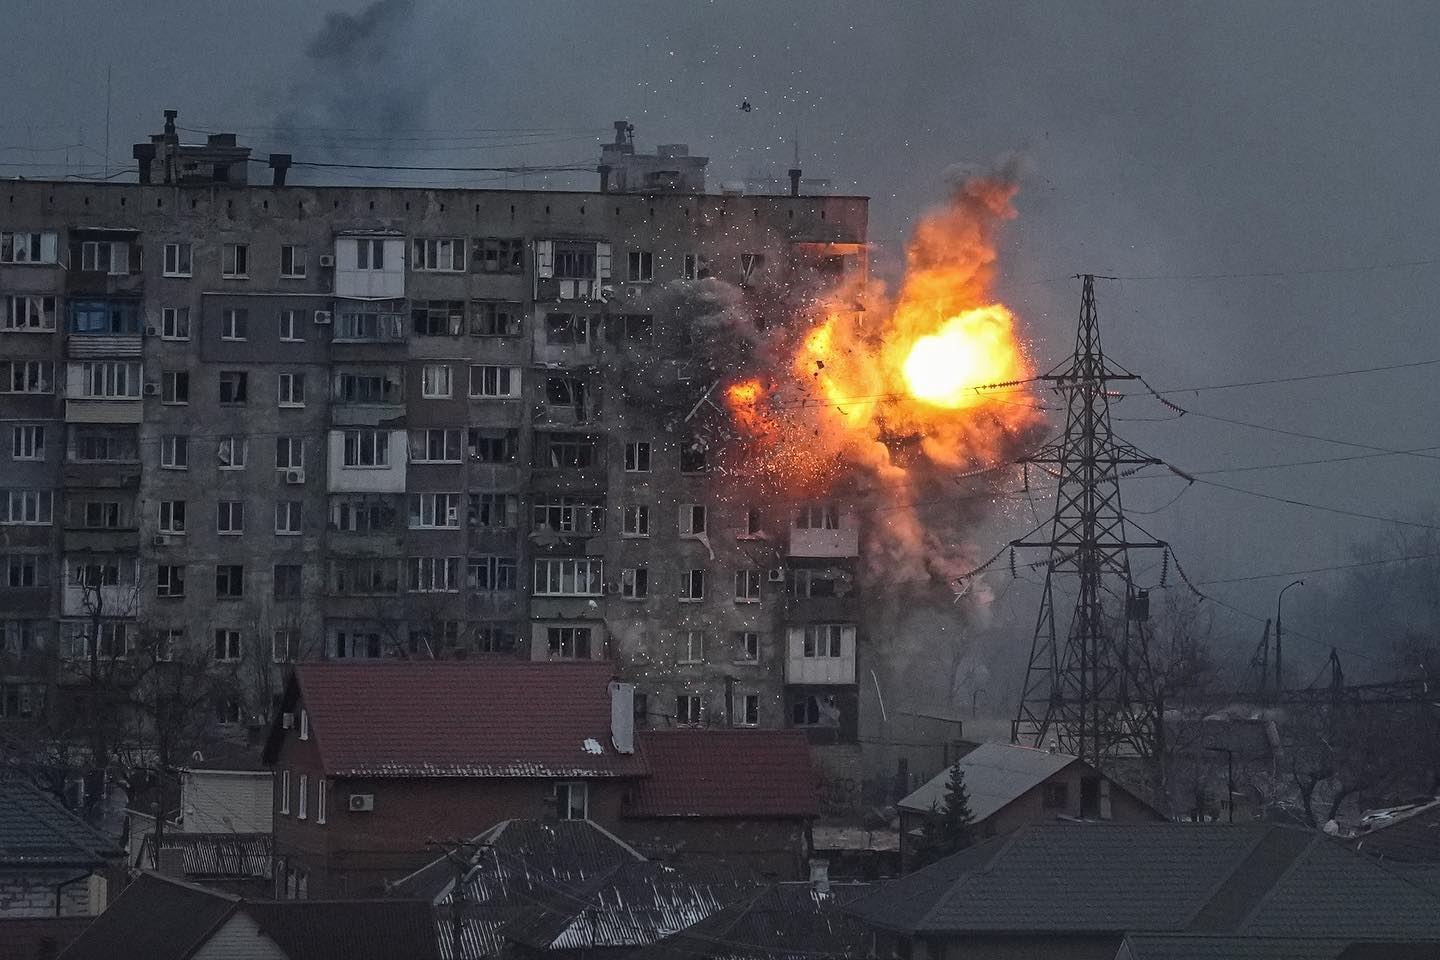 20 days of Russia's war in Ukraine in photos